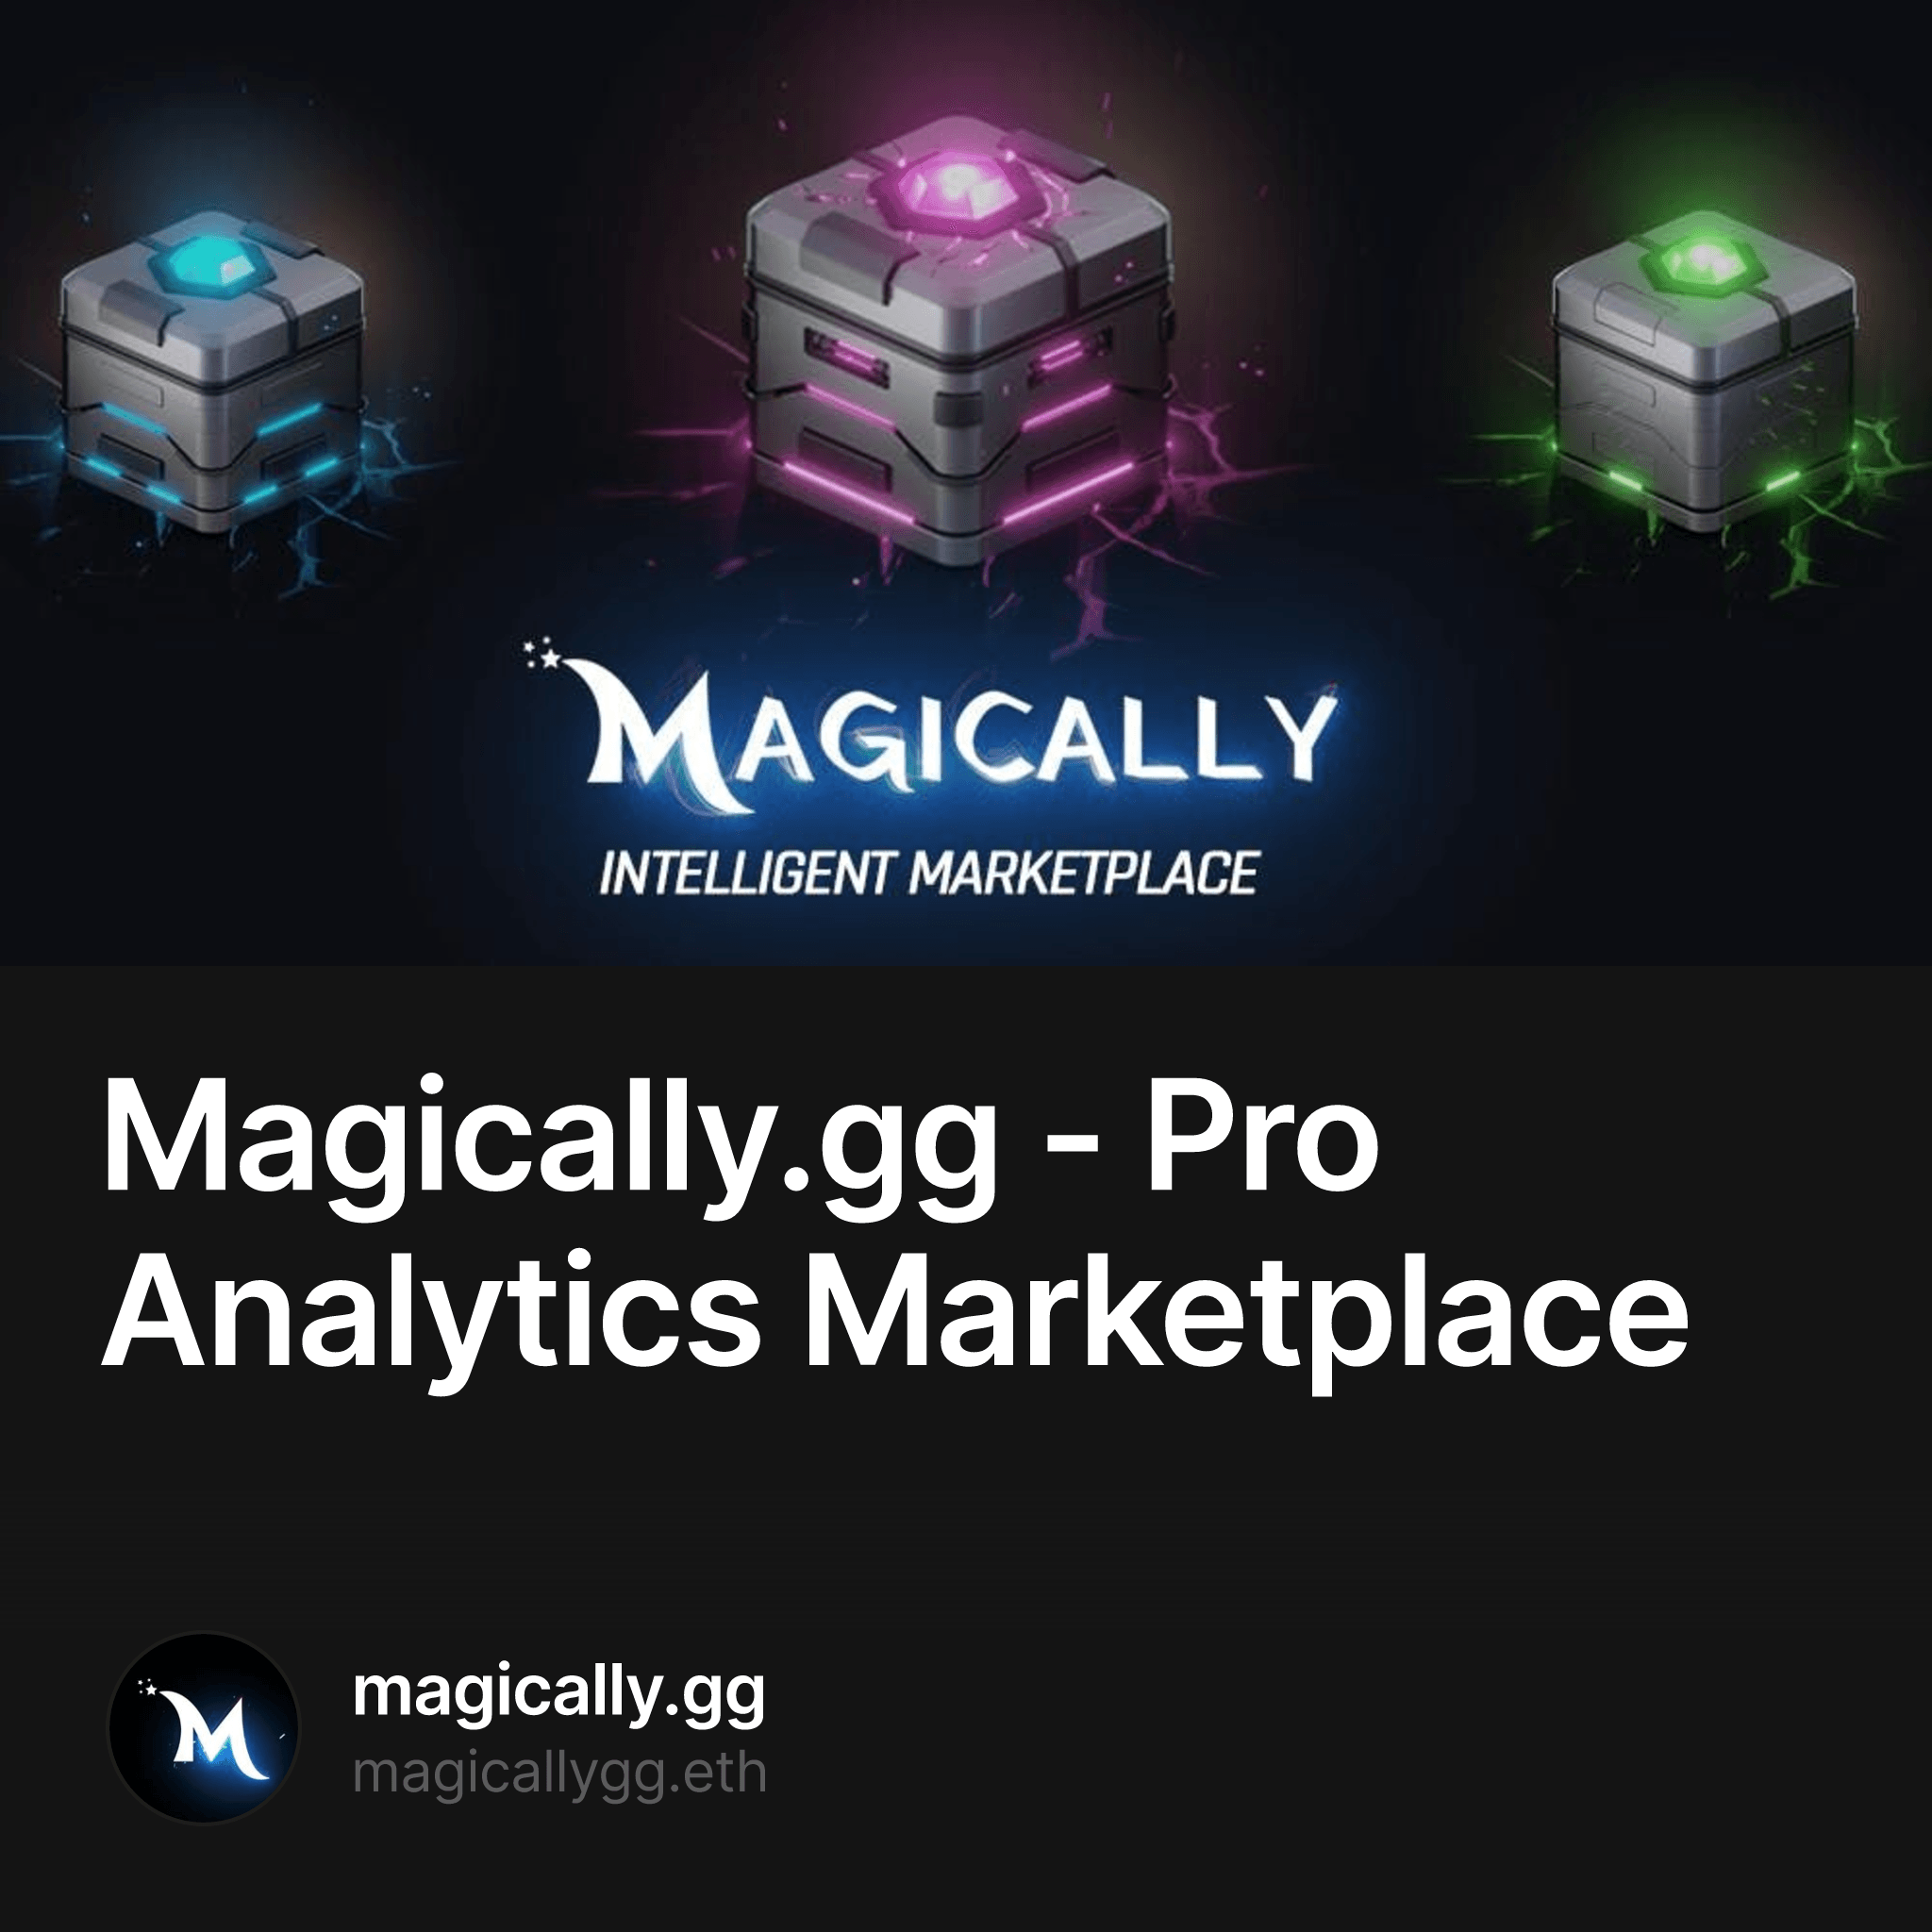 Magically.gg - Pro Analytics Marketplace 993/1000